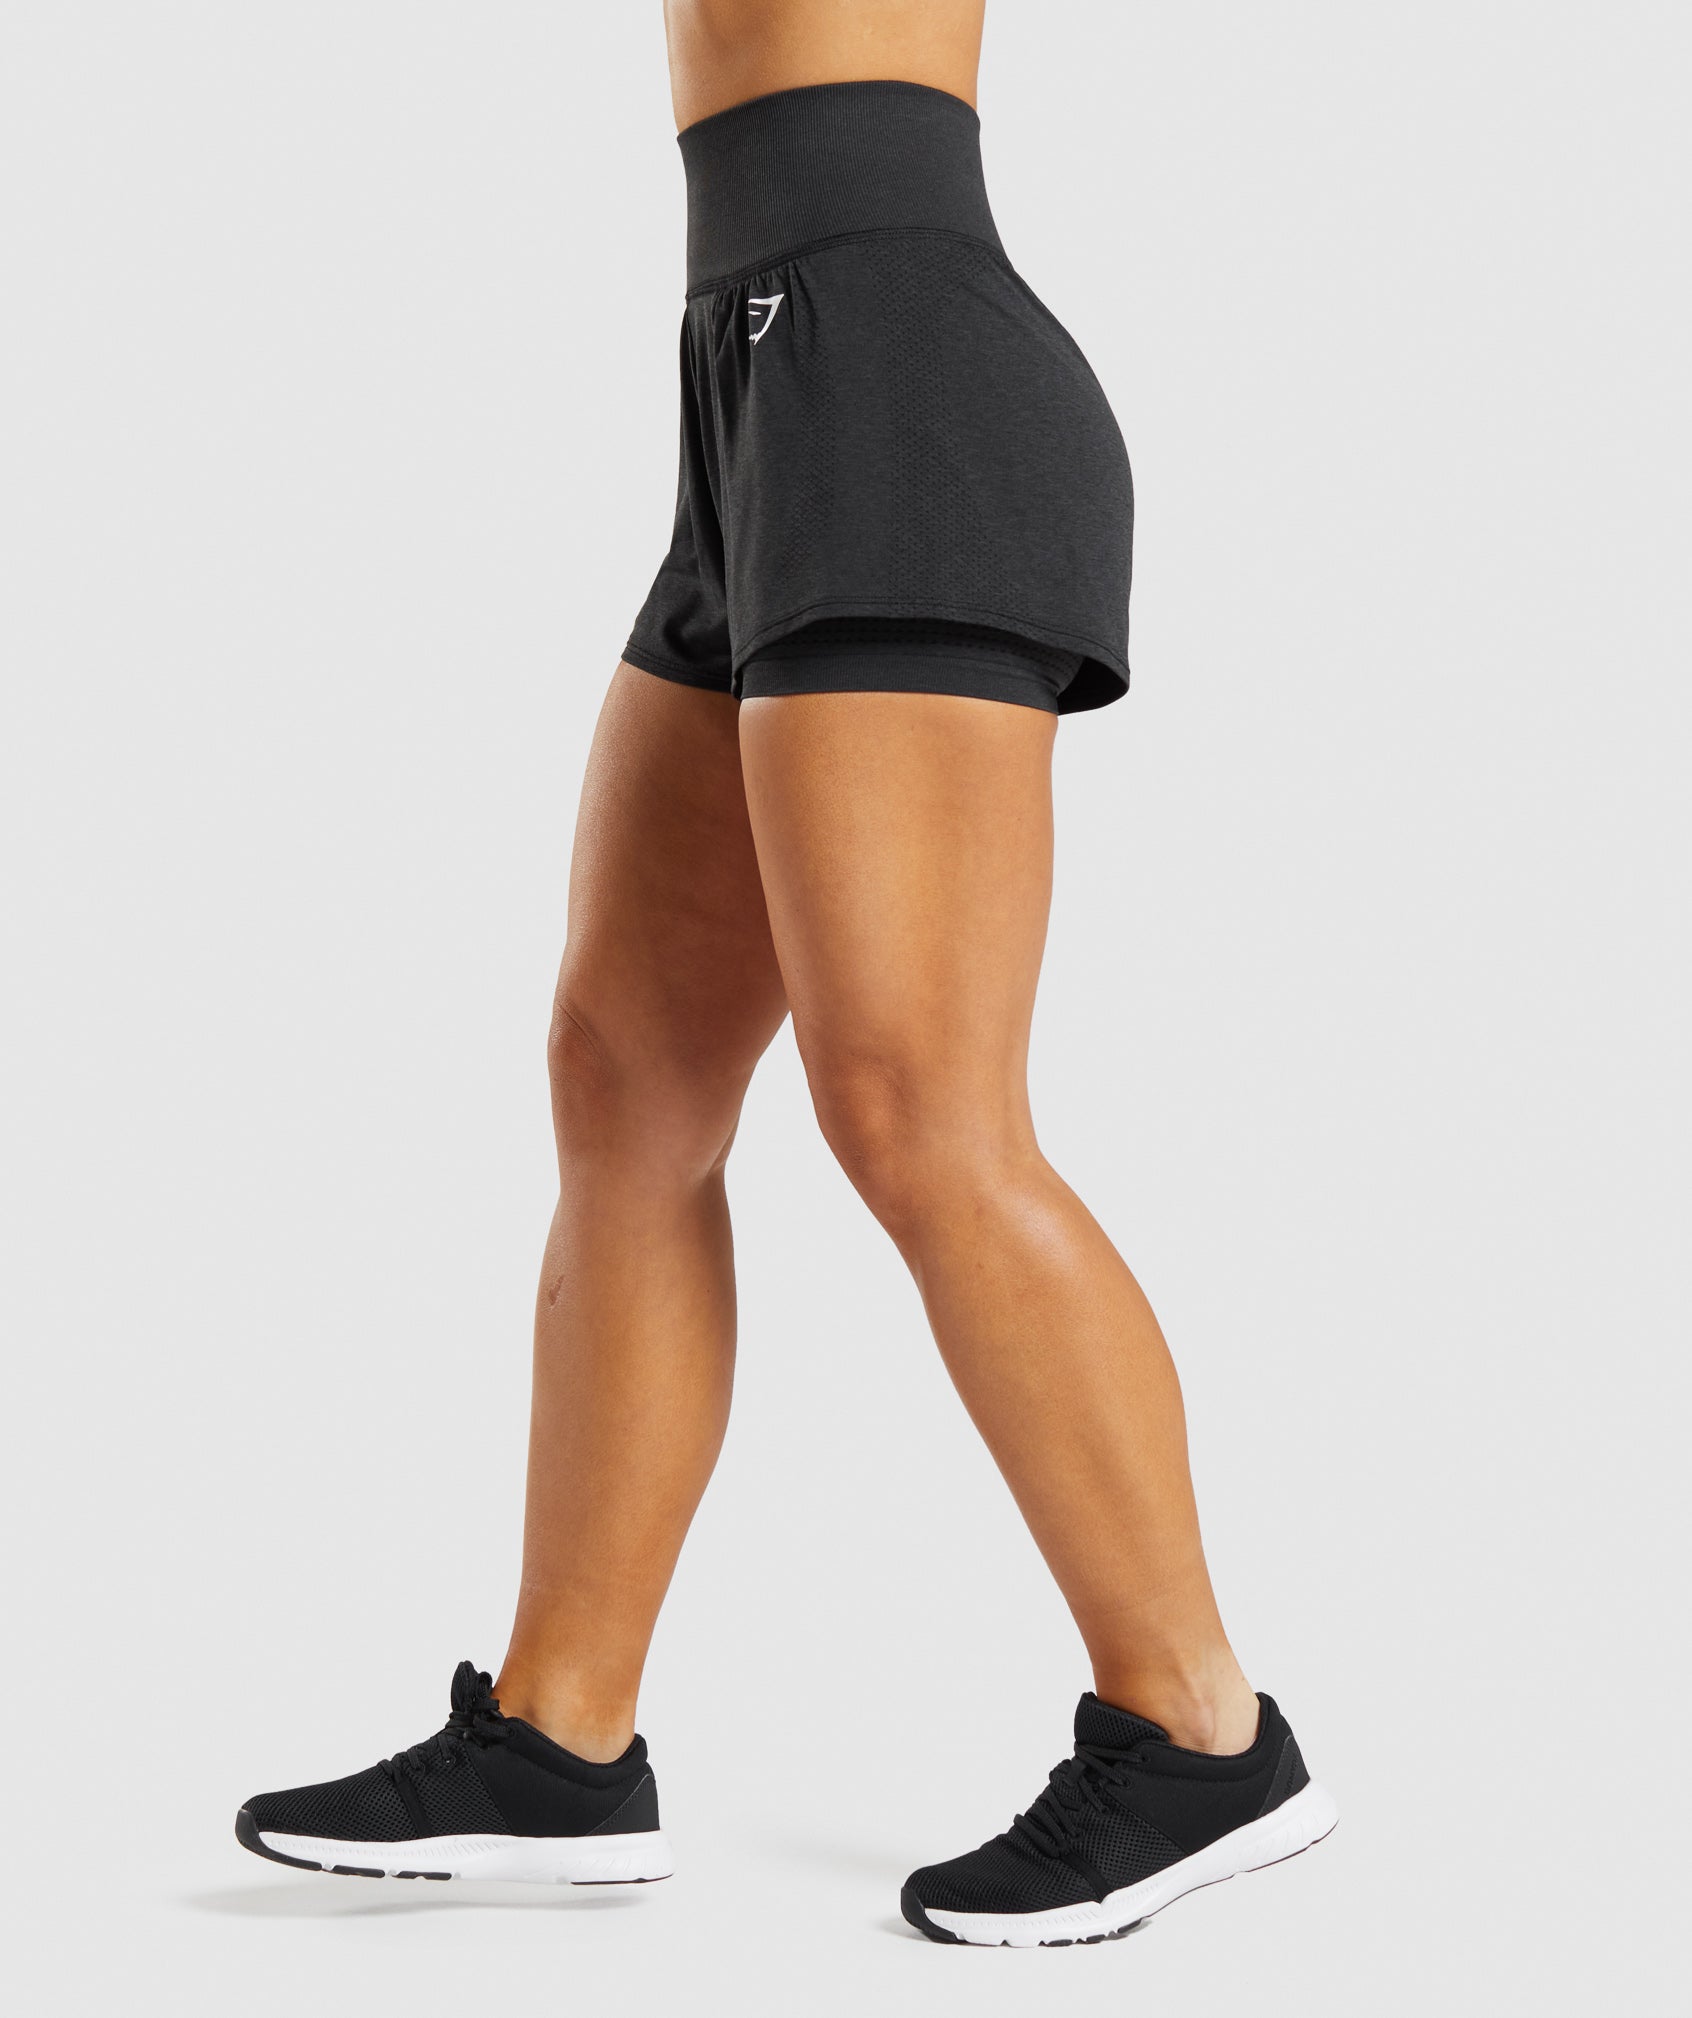 Gymshark Vital Seamless 2.0 2-in-1 Shorts - Baked Maroon Marl